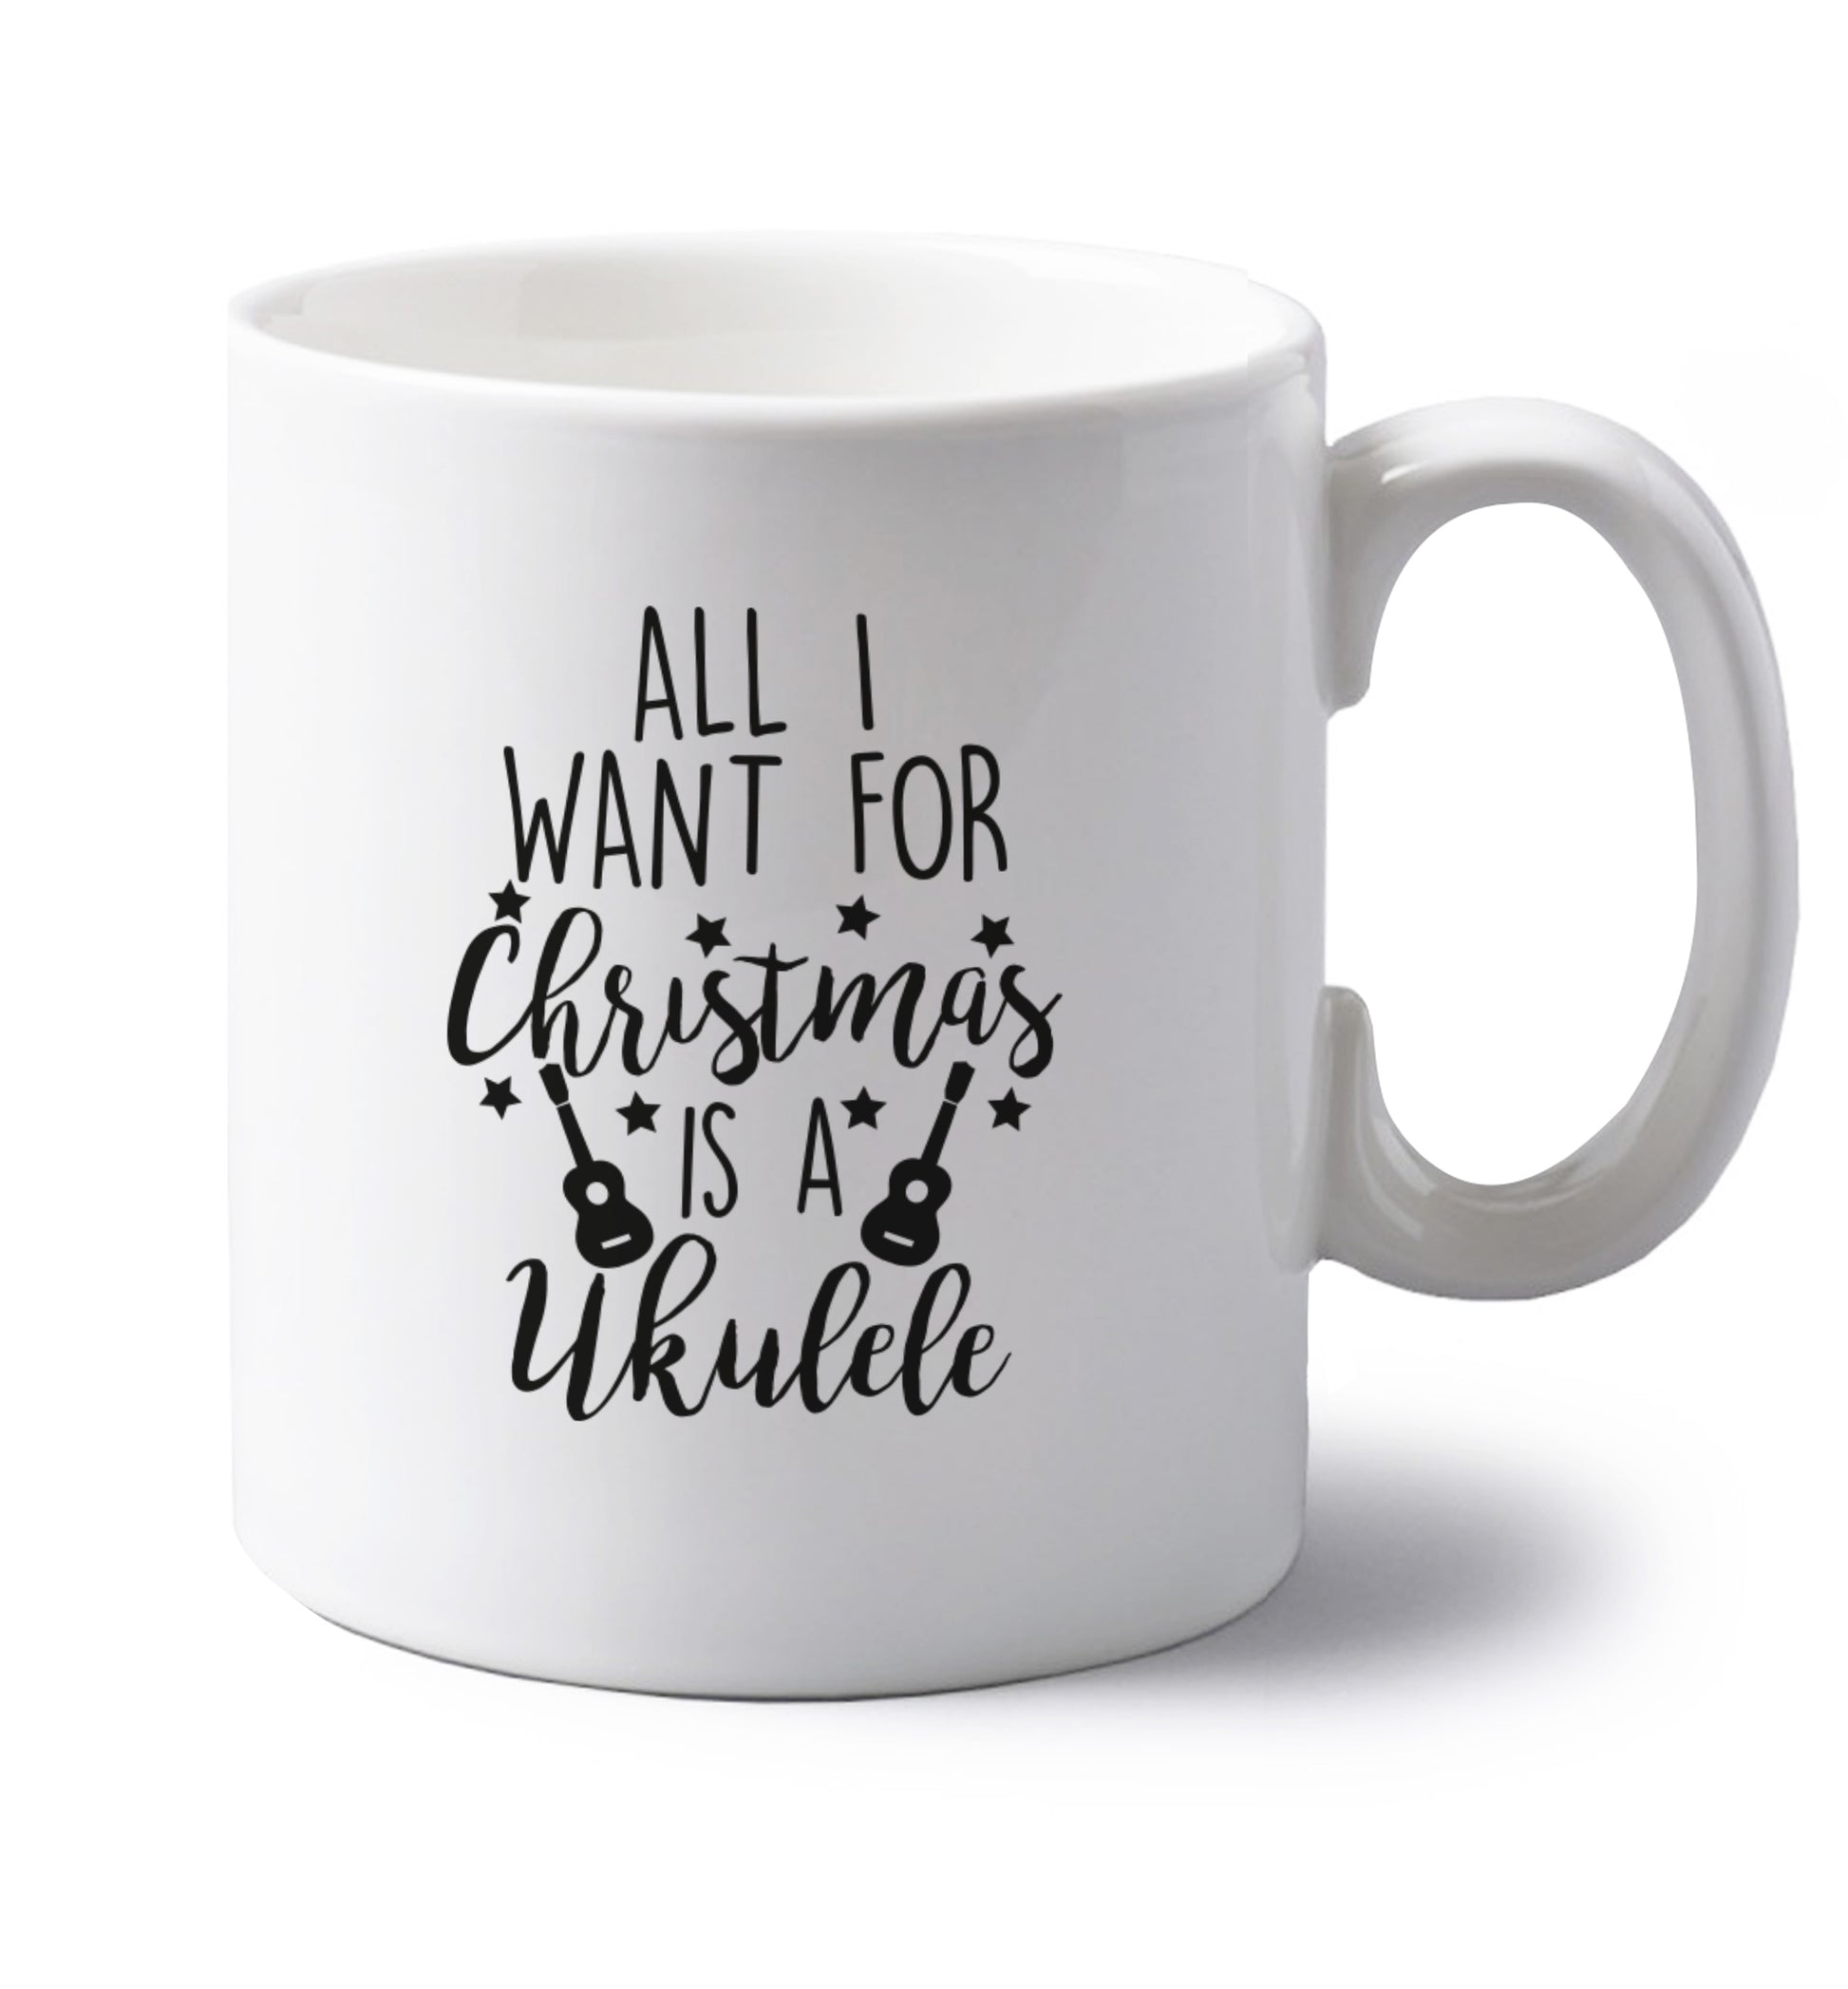 All I want for christmas is a ukulele left handed white ceramic mug 